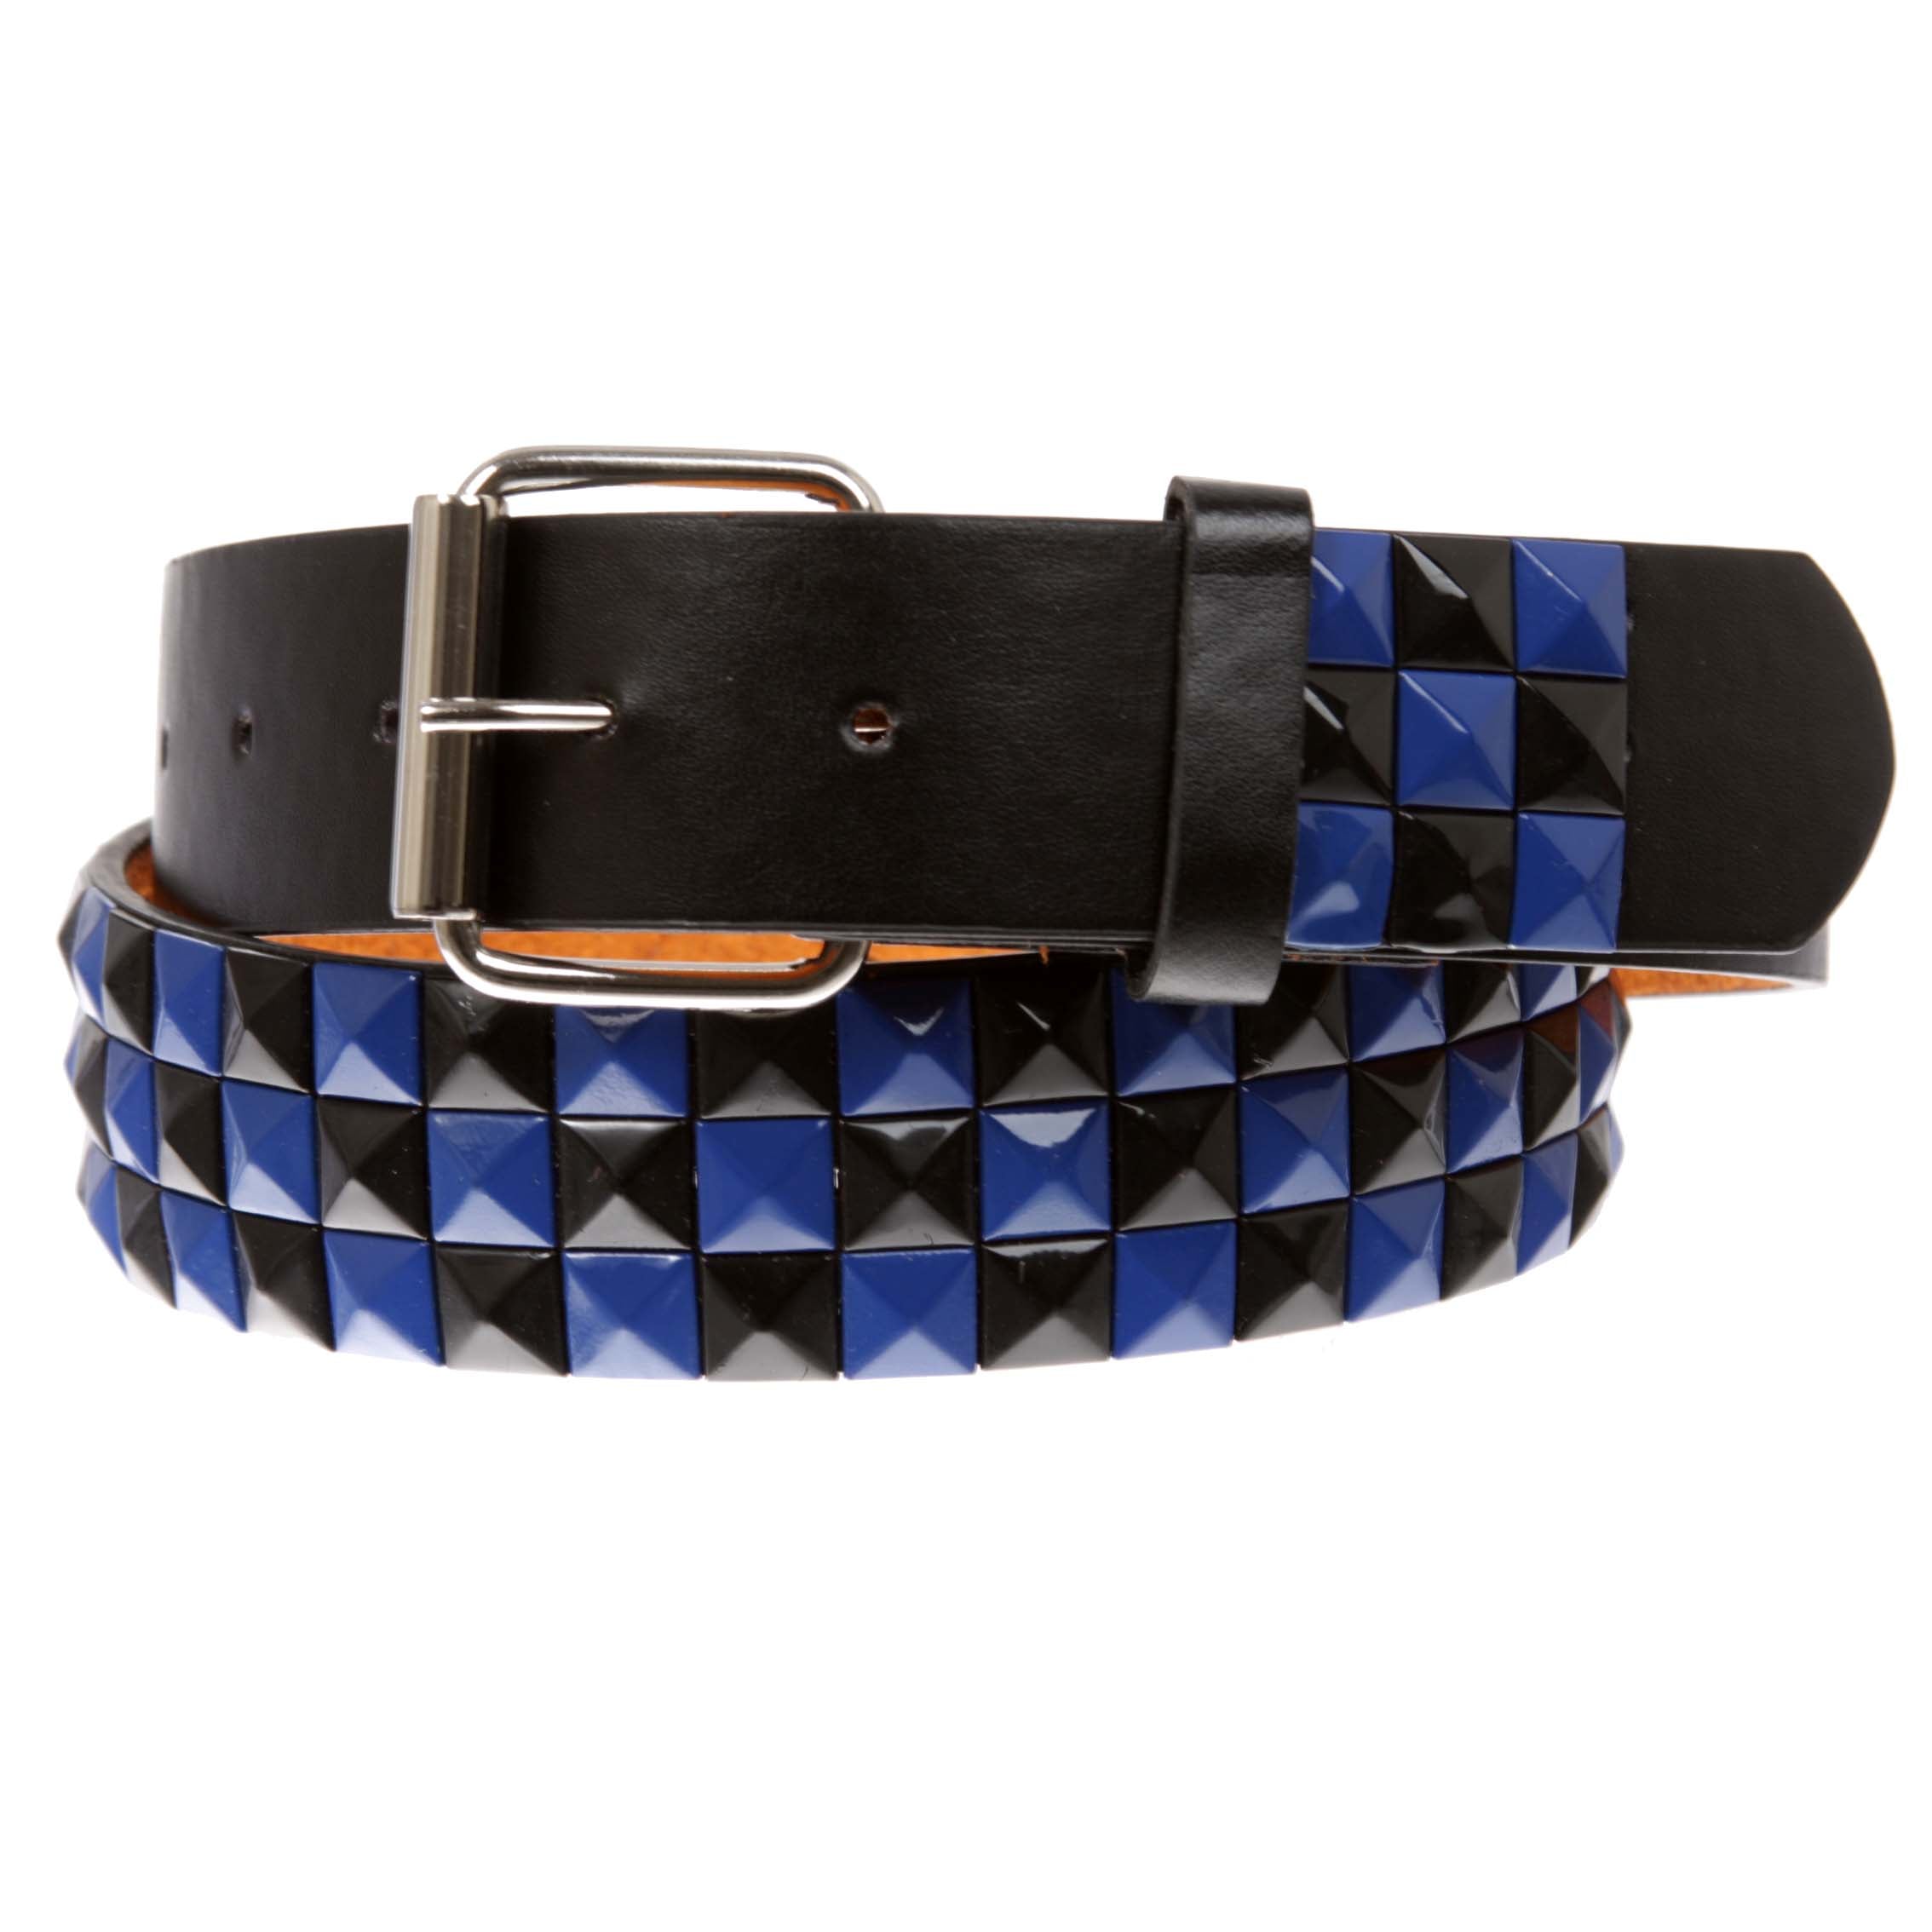 Snap On Punk Rock Black & Blue Star Studded Checker Board Leather Belt